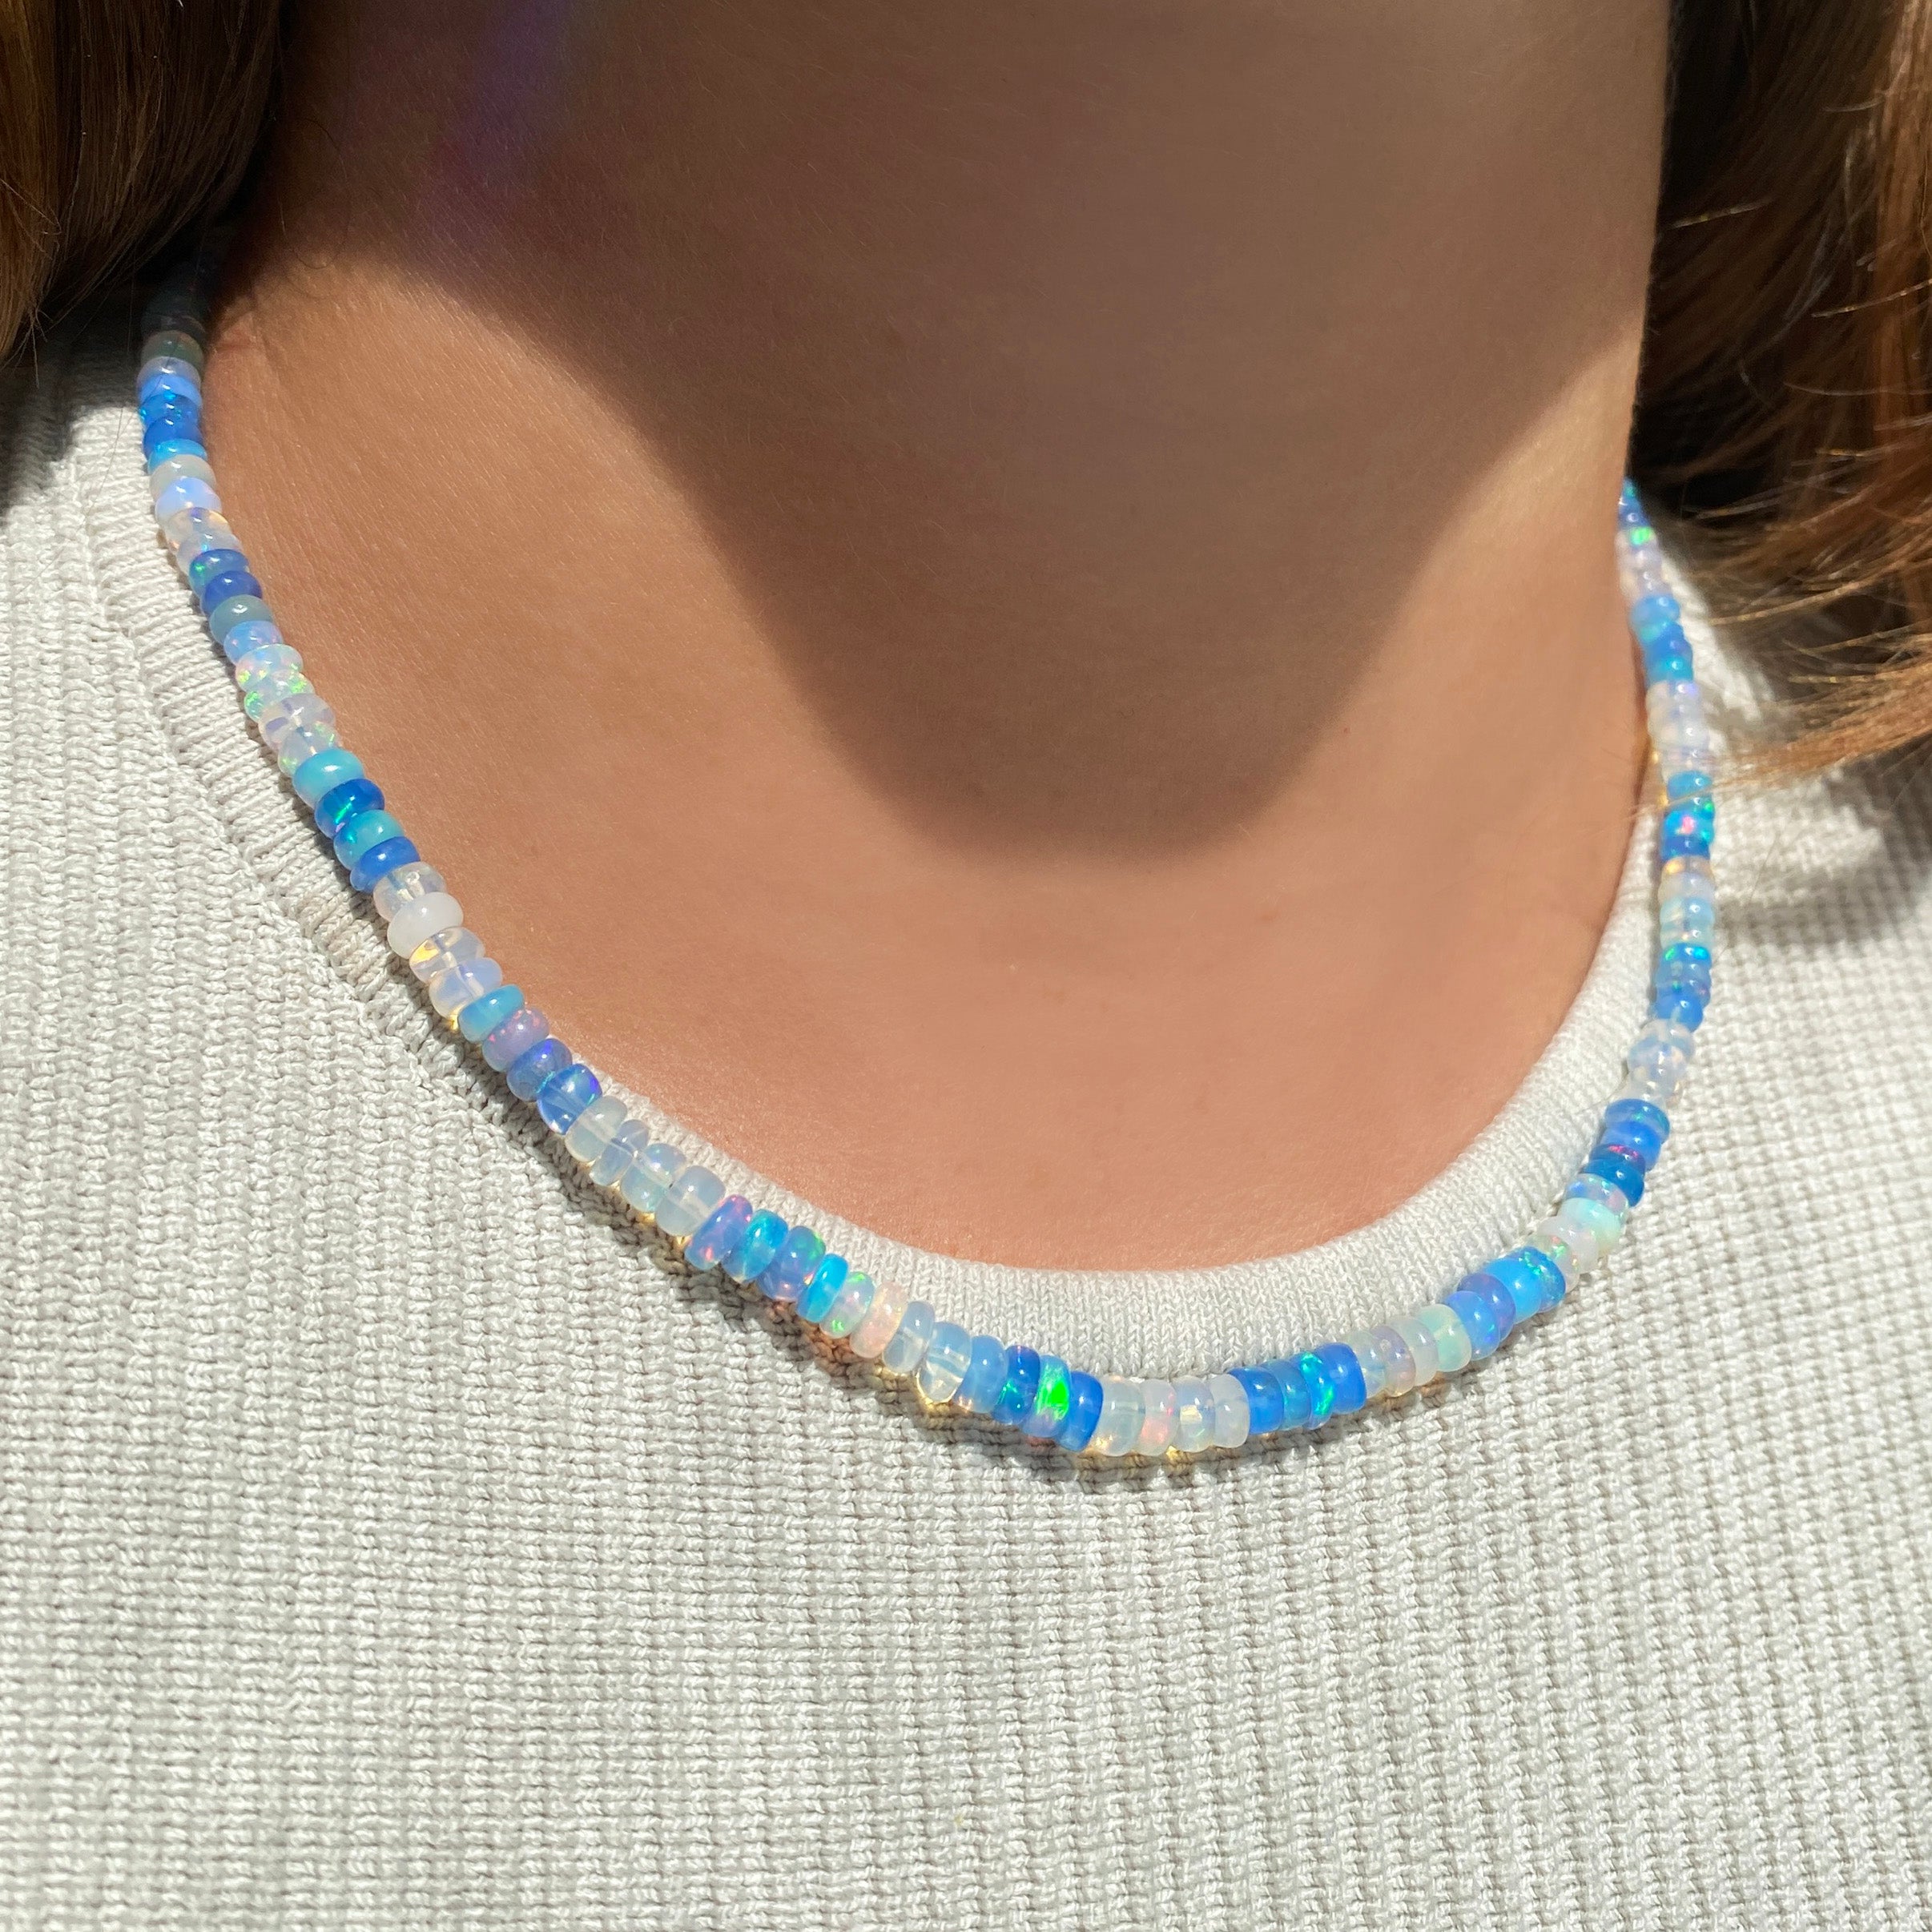 Blue Opal Necklace, 16.5 Inches Long – Kathy Bankston